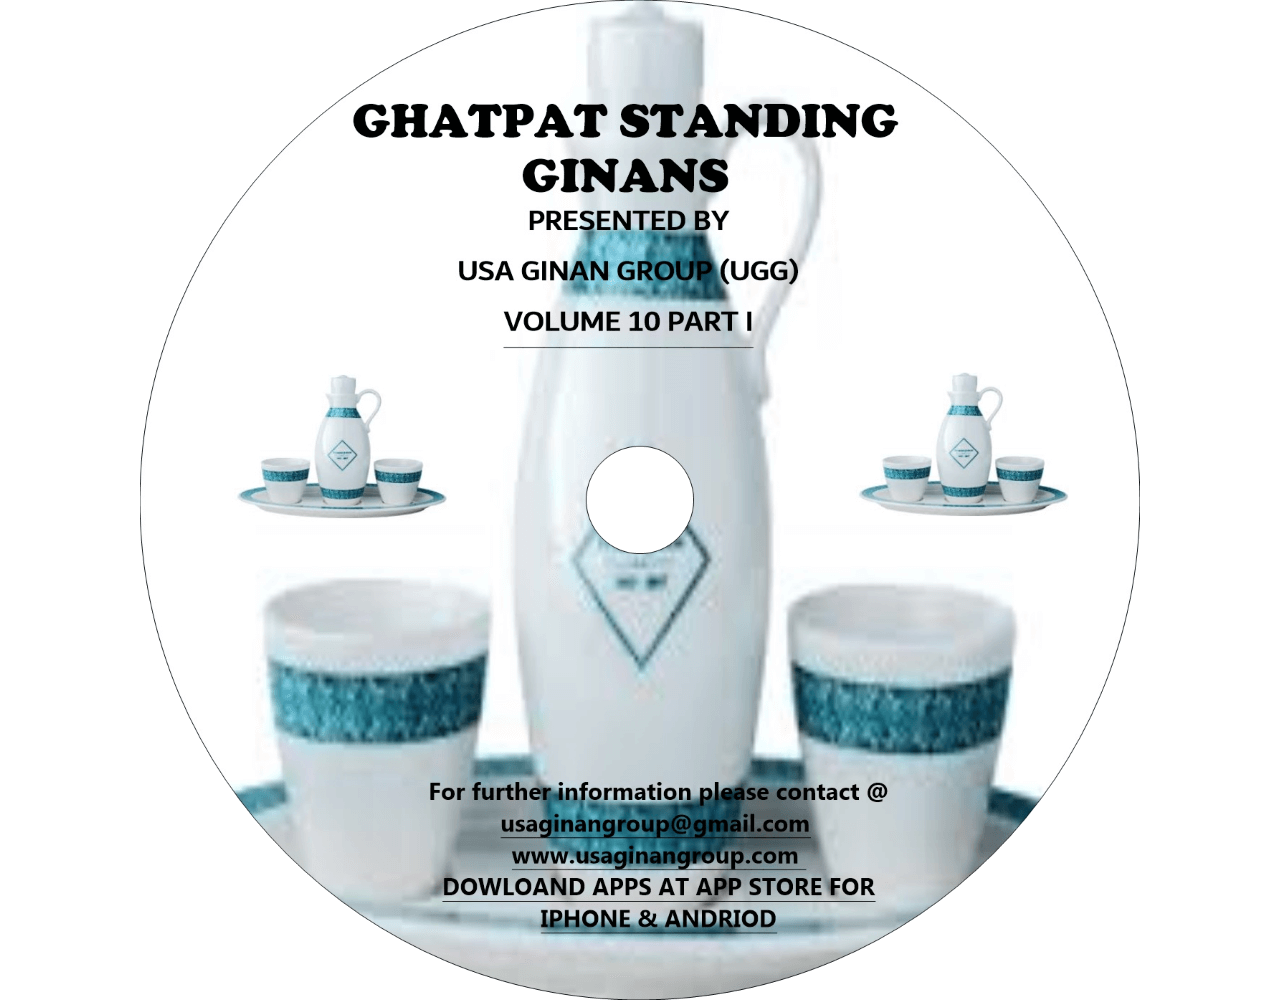 Ghatpat Standing Ginans